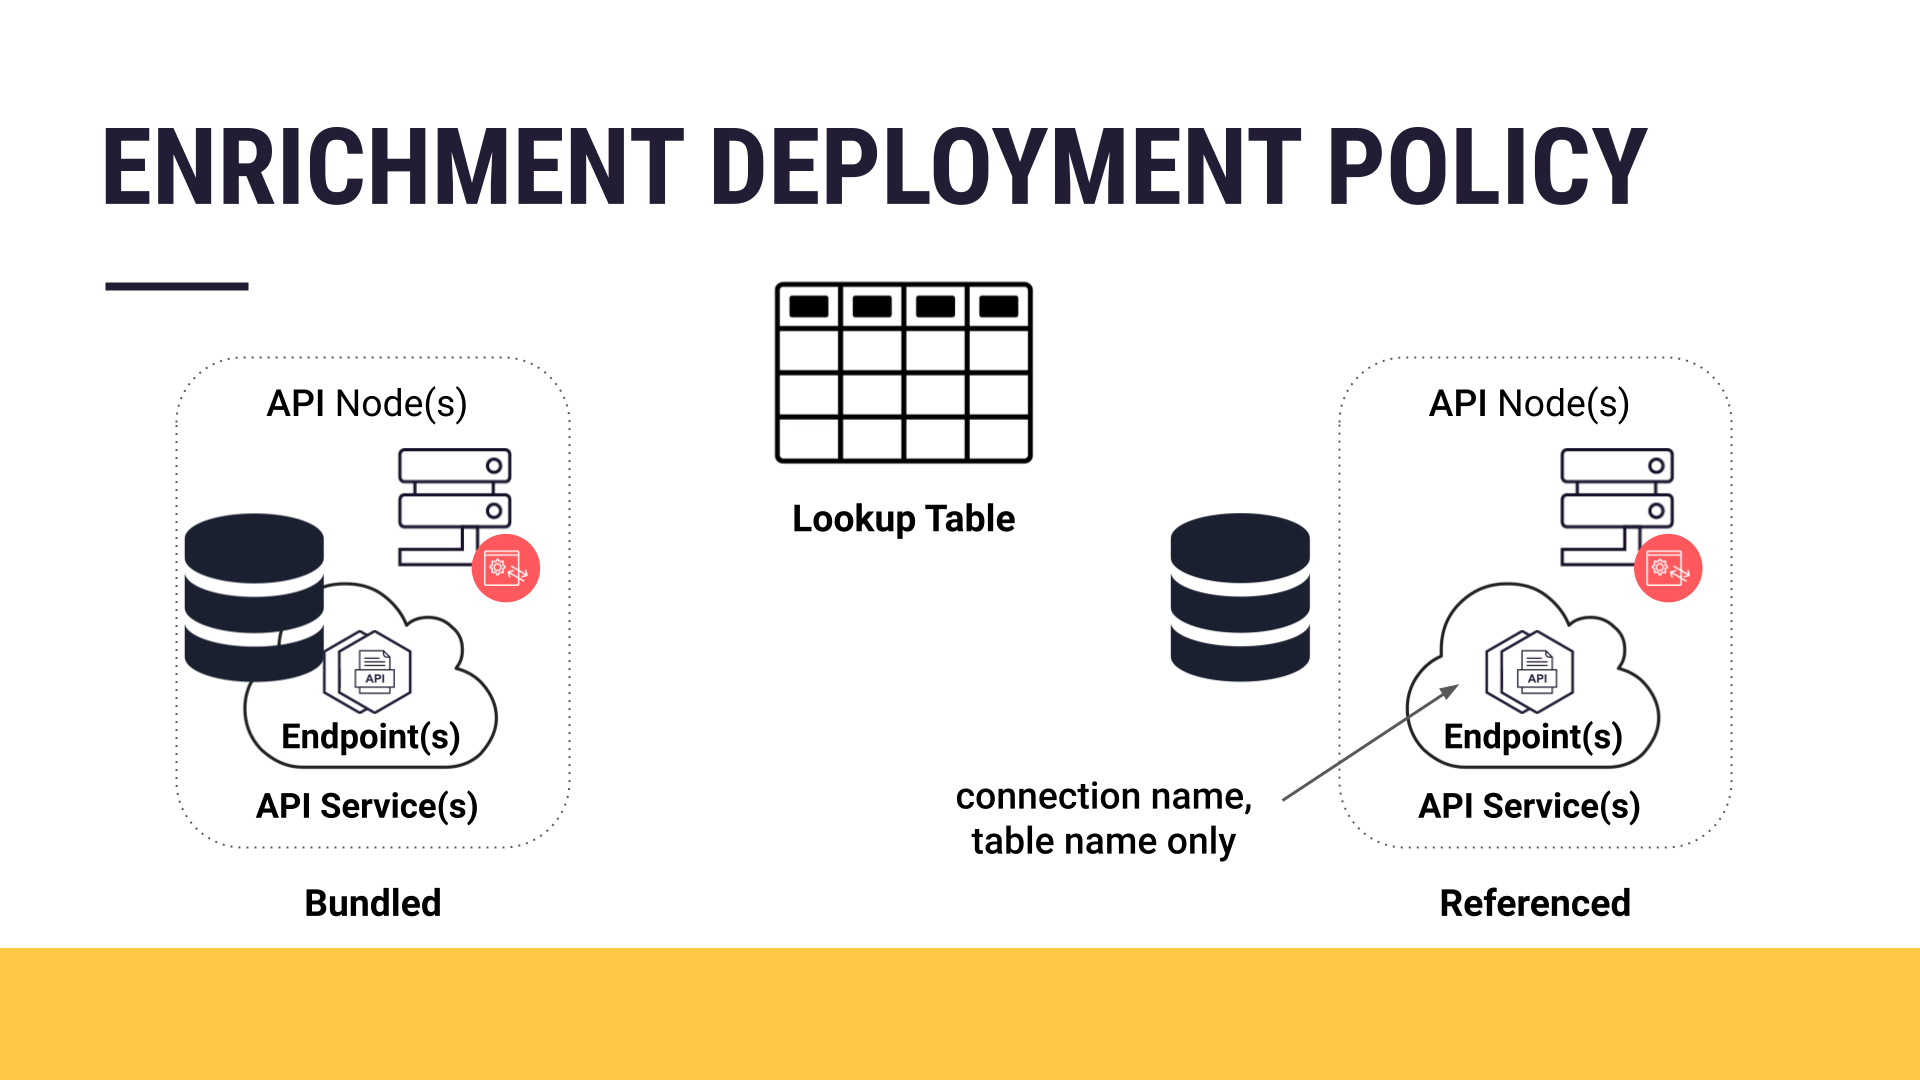 Slide depicting enrichment deployment policy.